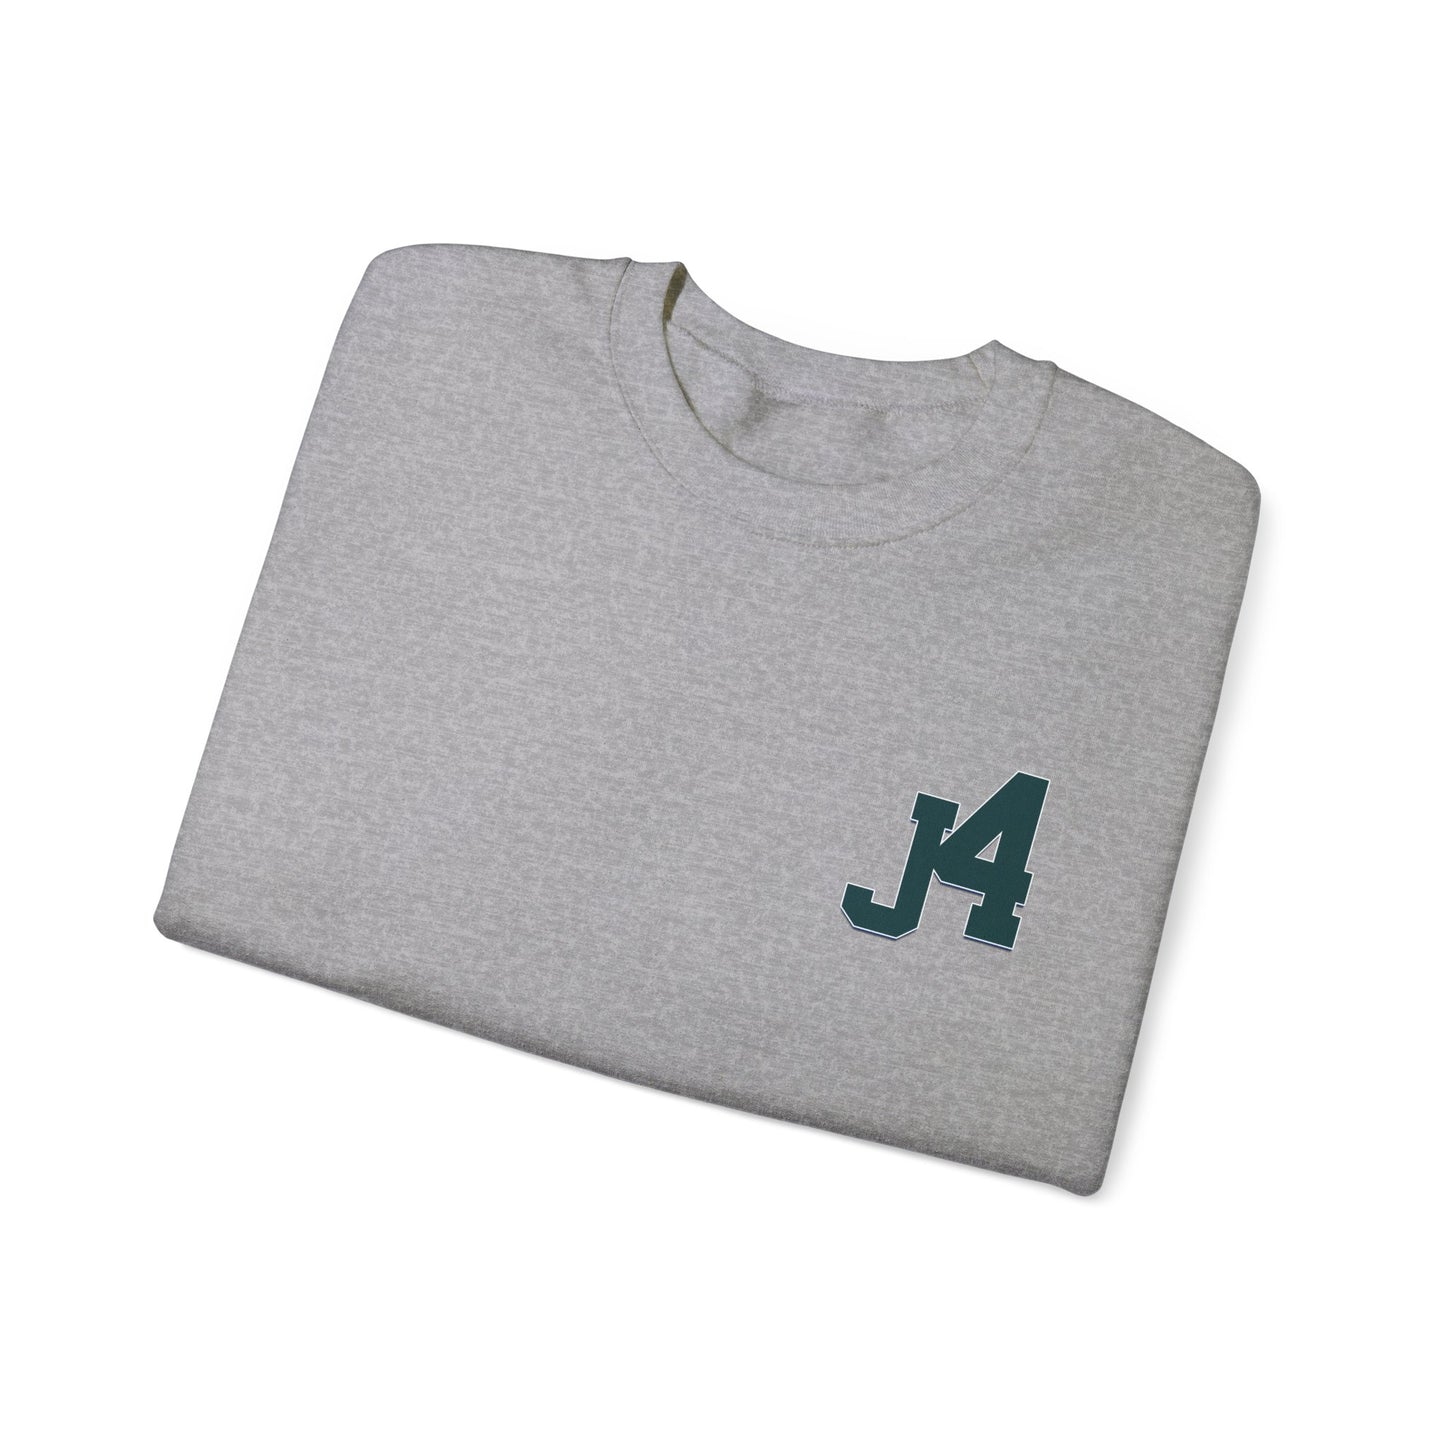 J4 Crewneck Sweatshirt